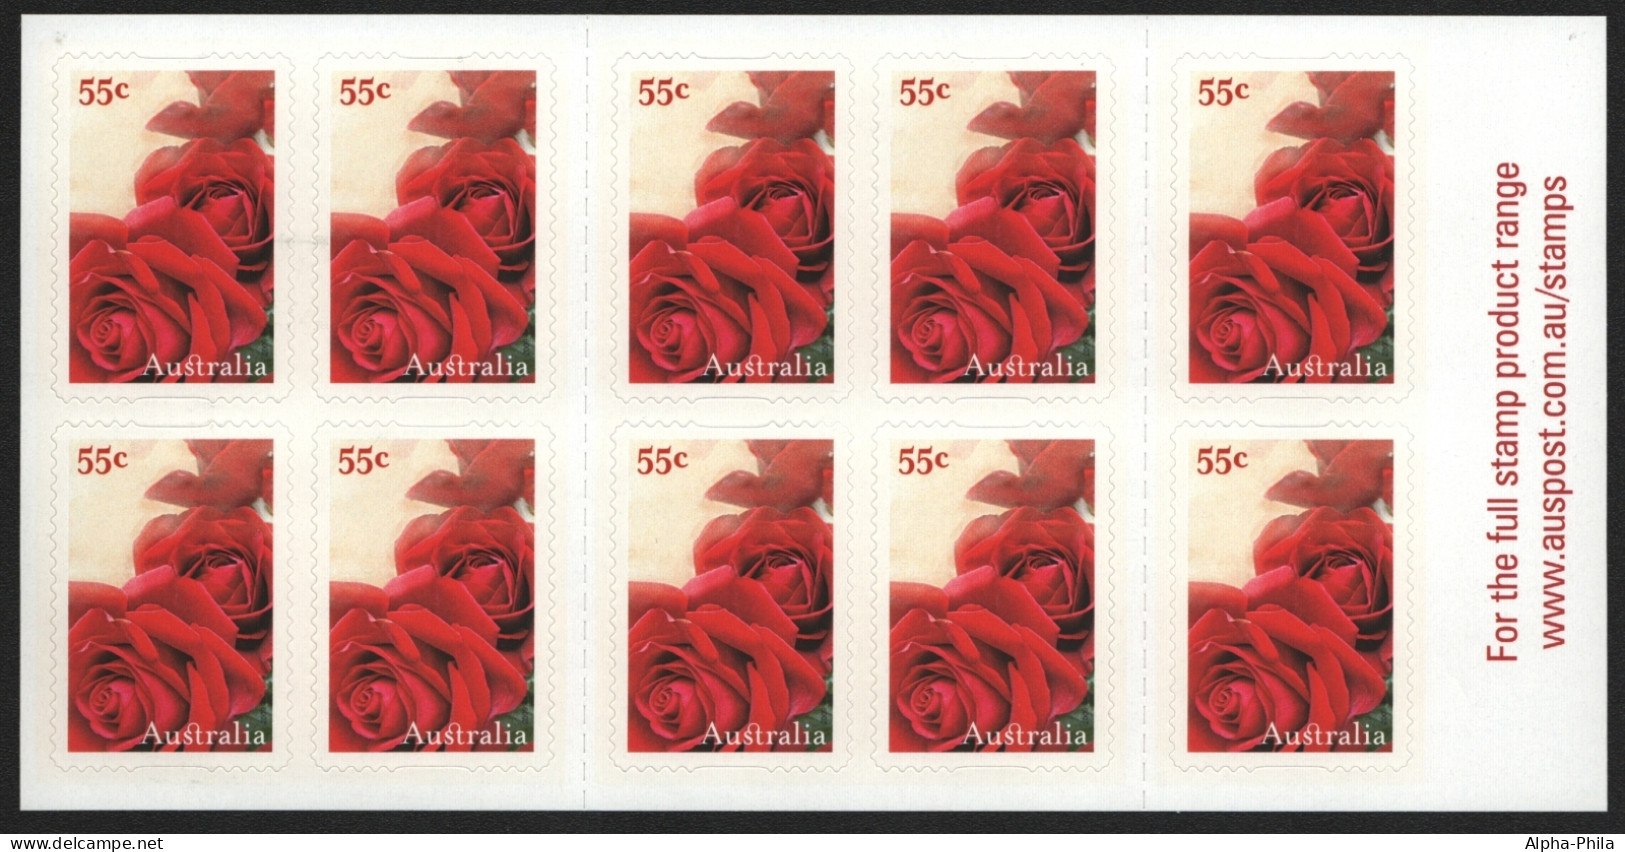 Australien 2009 - Mi-Nr. 3151 I BA ** - MNH - Markenheft 412 - Grußmarken - Mint Stamps